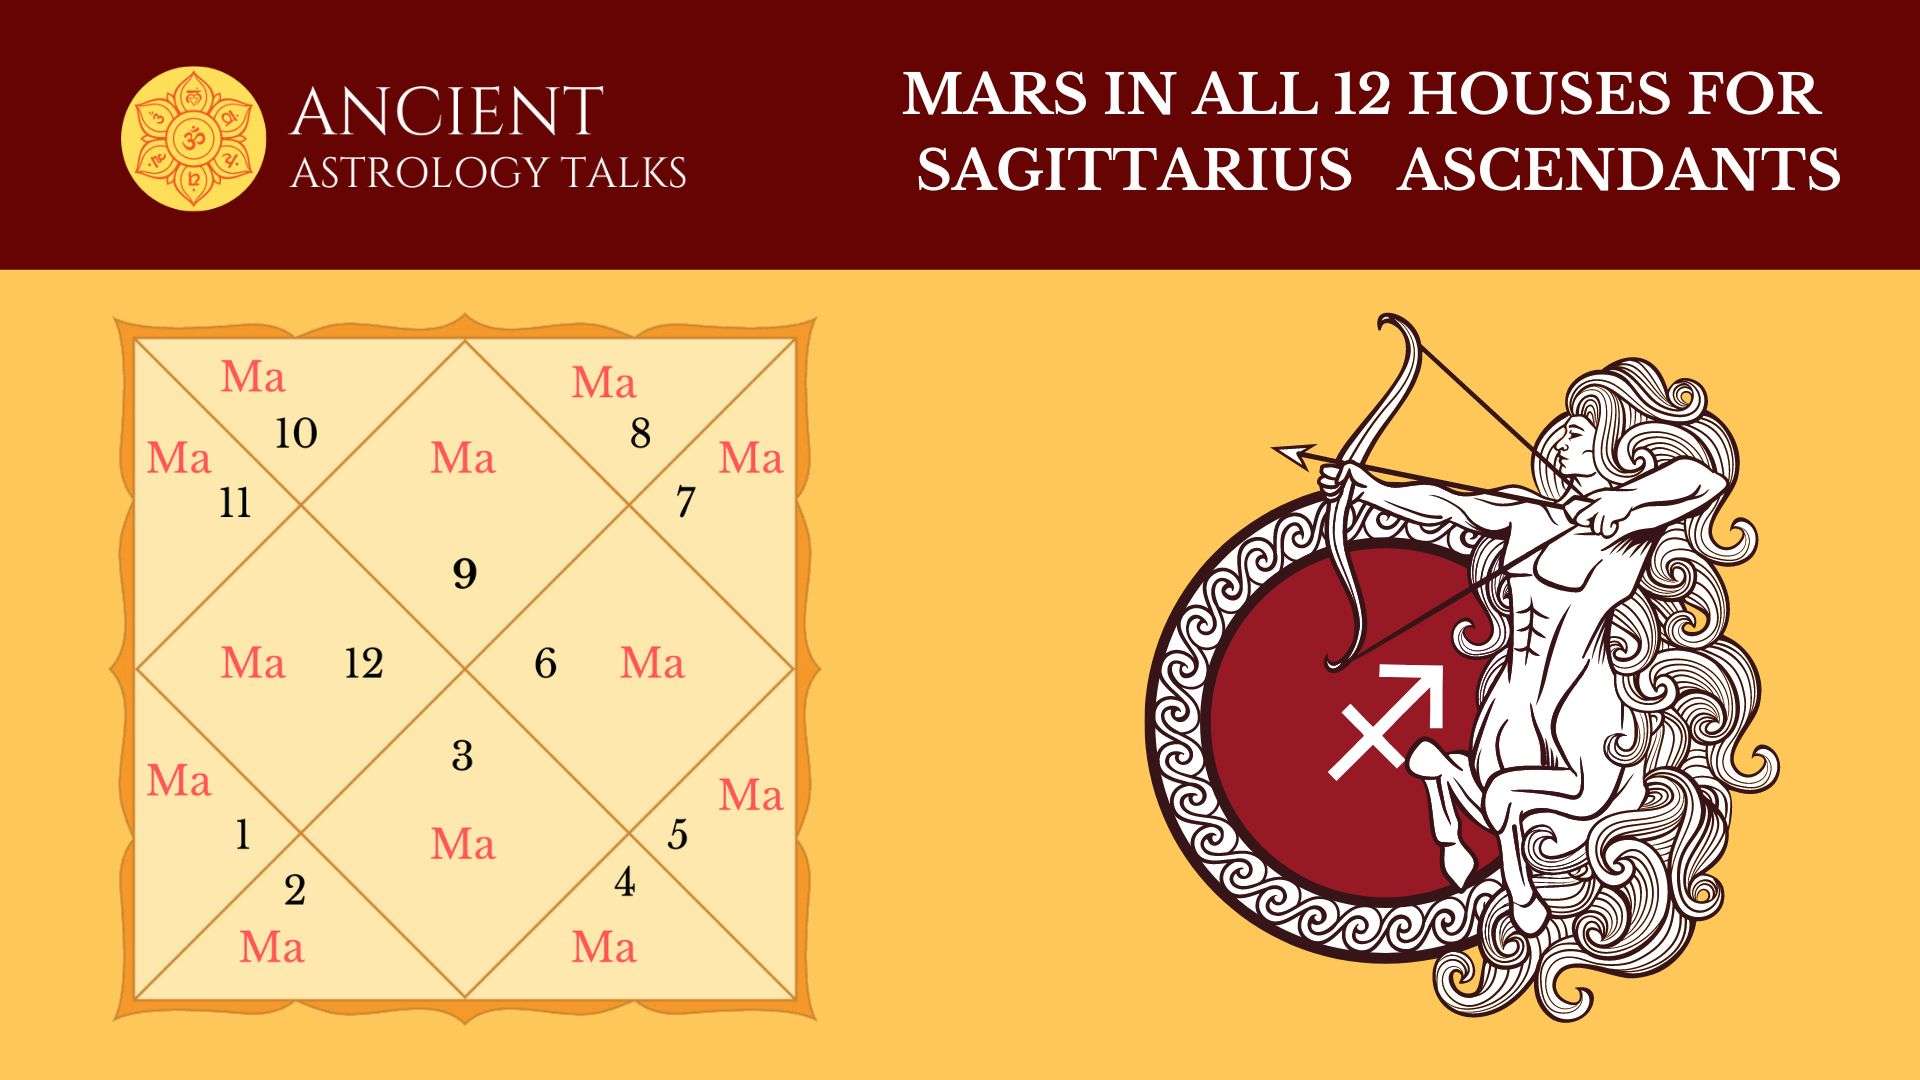 Mars IN ALL 12 HOUSES FOR Sagittarius ASCENDANTS